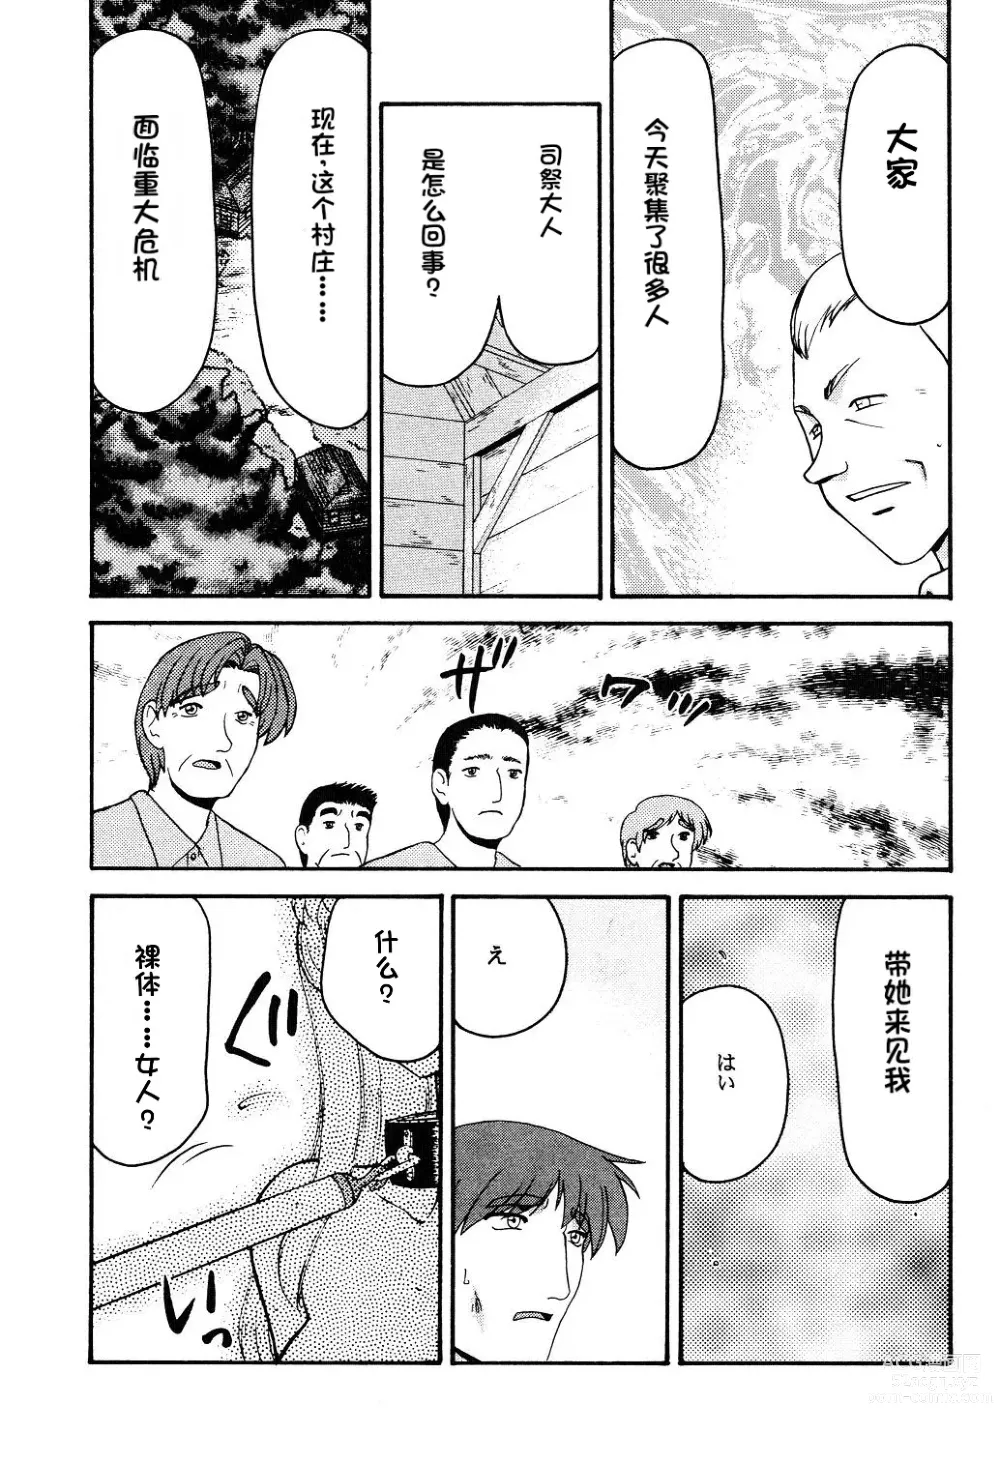 Page 152 of doujinshi NISE Dragon Blood! 9-12